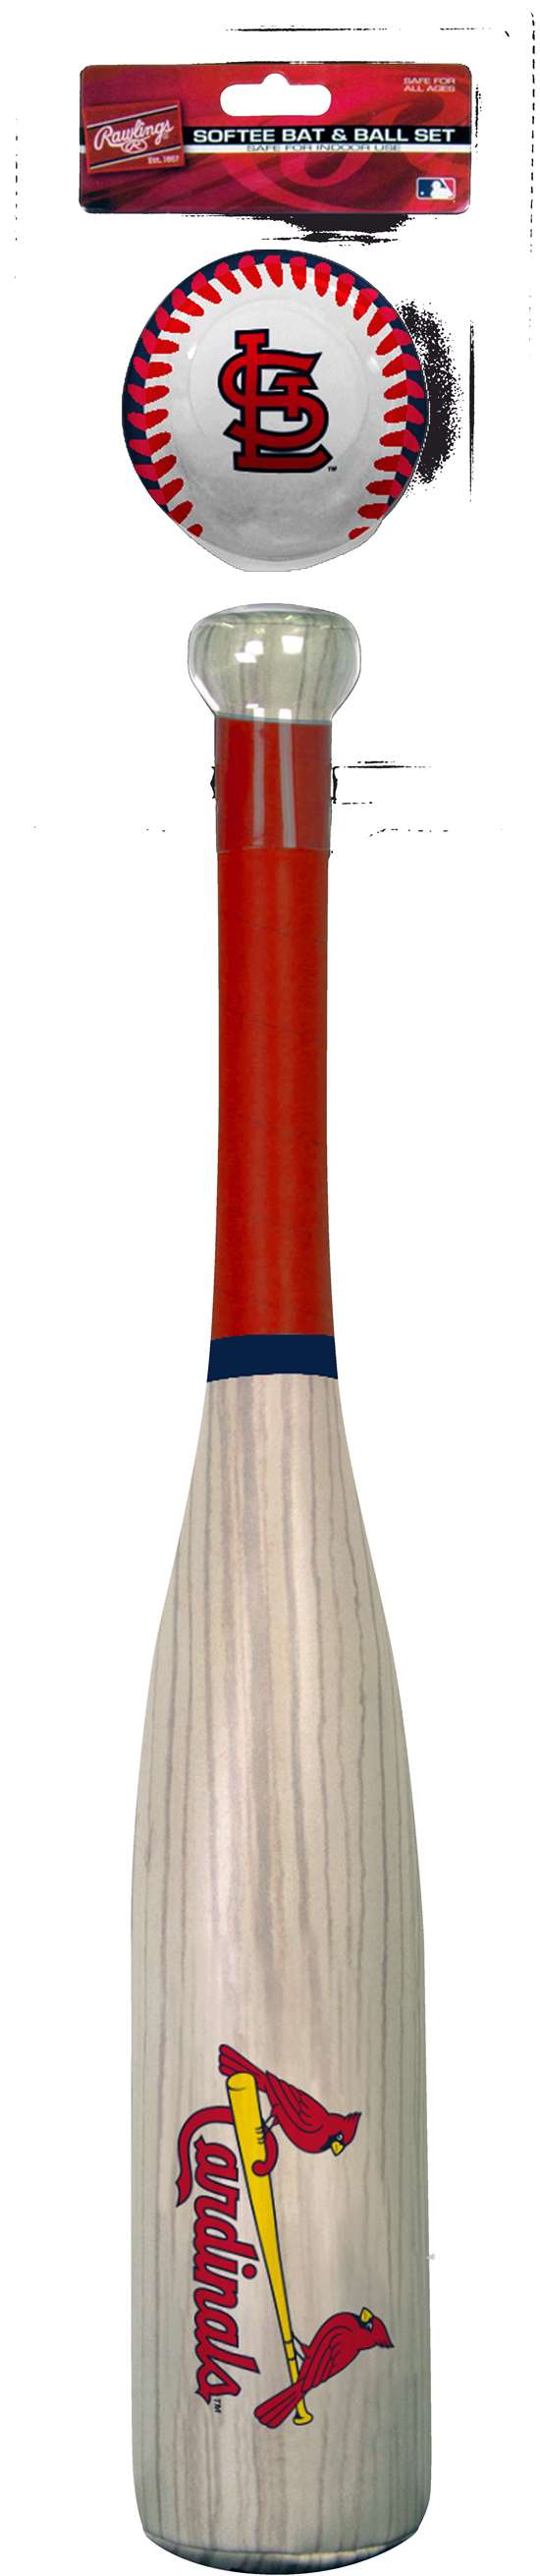 MLB St. Louis Cardinals Grand Slam Softee Bat and Ball Set (Wood Grain)